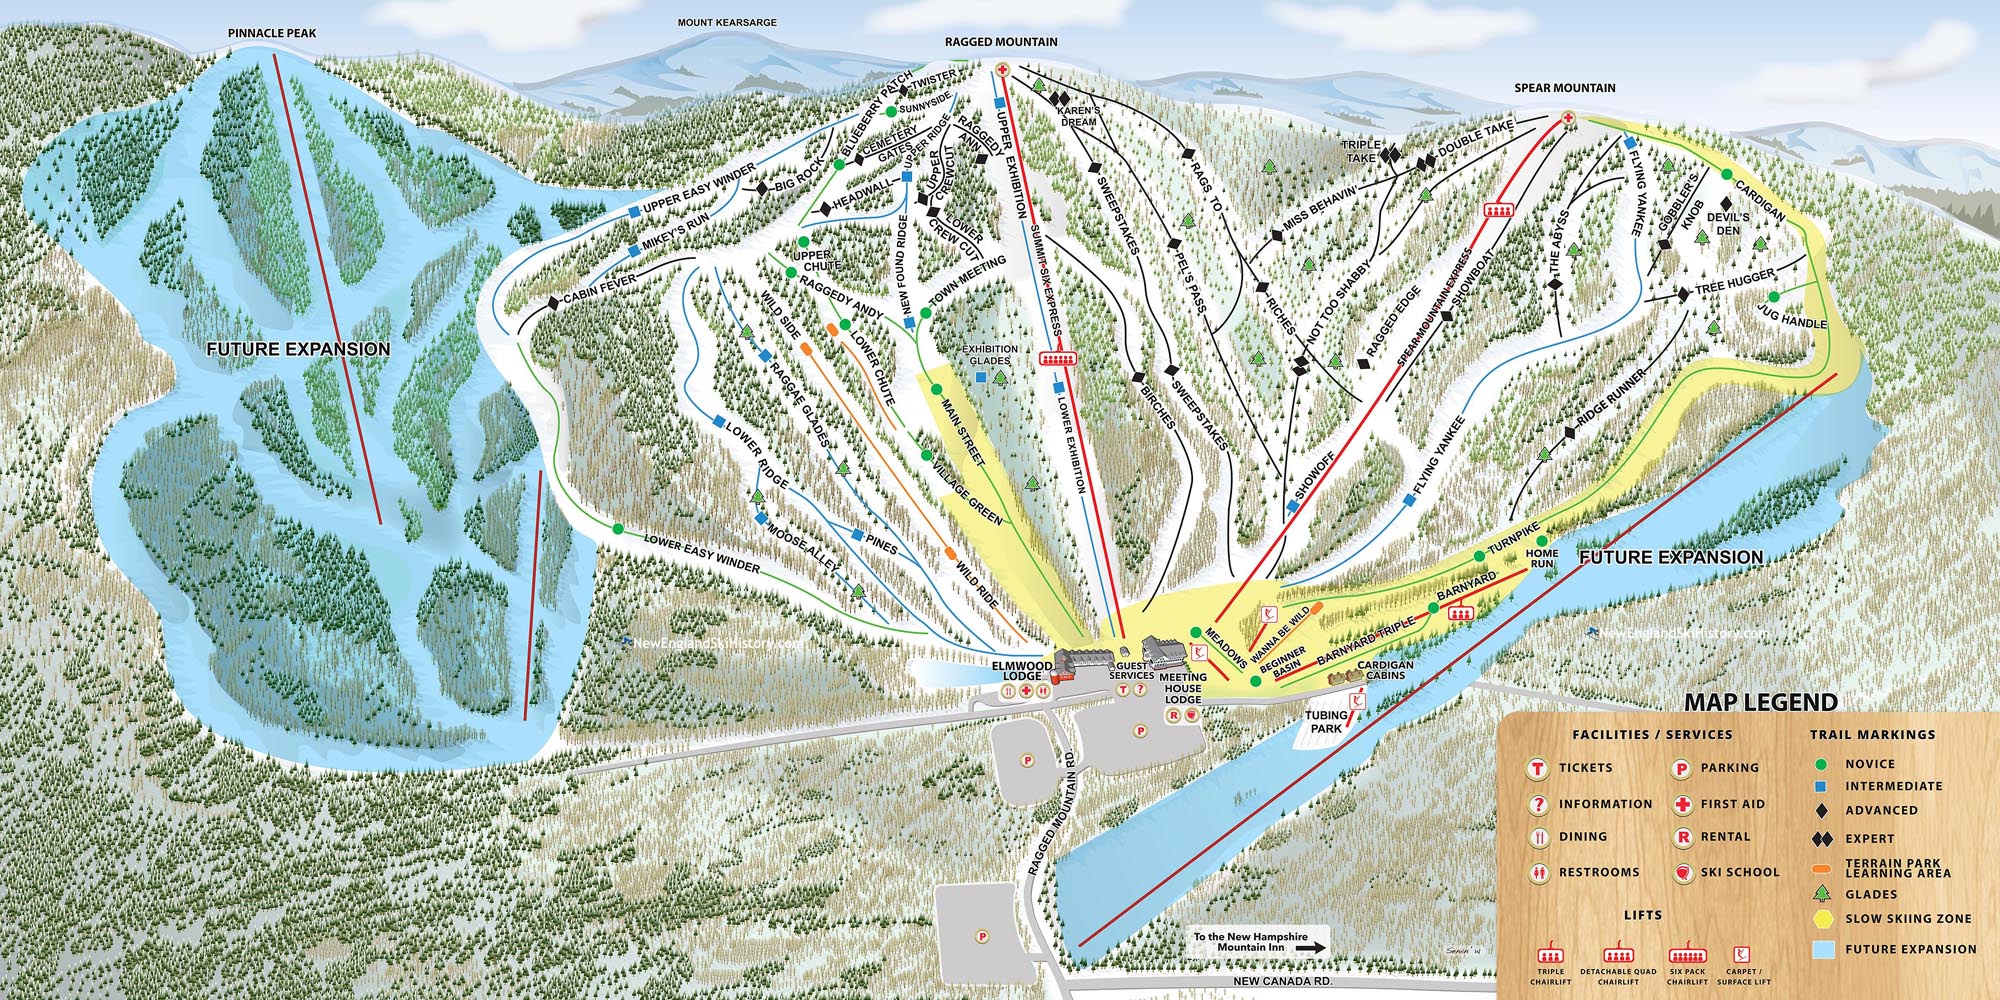 2019-20 Ragged Mountain Trail Map. 